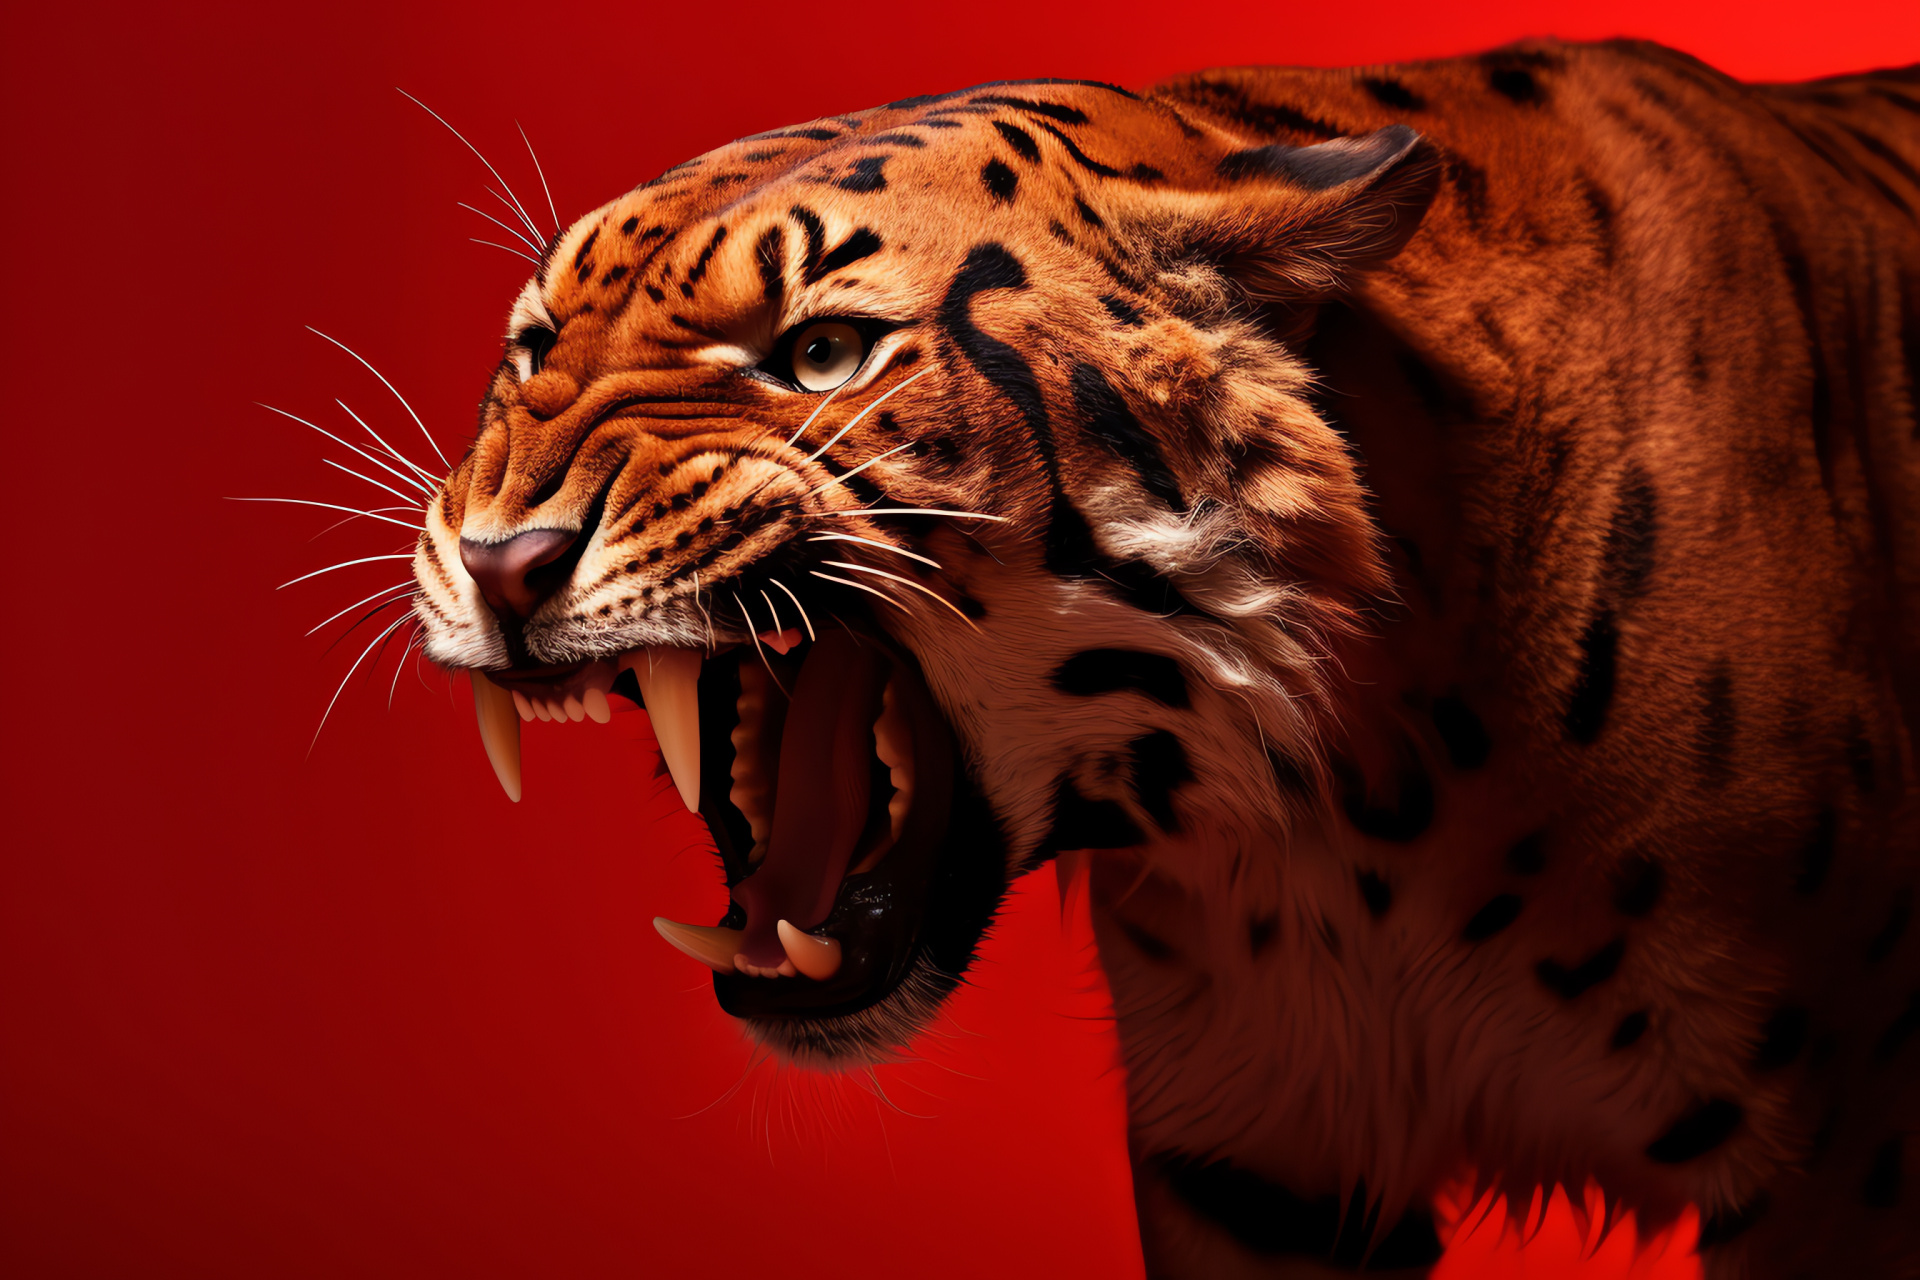 Saber Tooth Tiger, striking stripe pattern, ice age beast, wild feline, natural history, HD Desktop Wallpaper